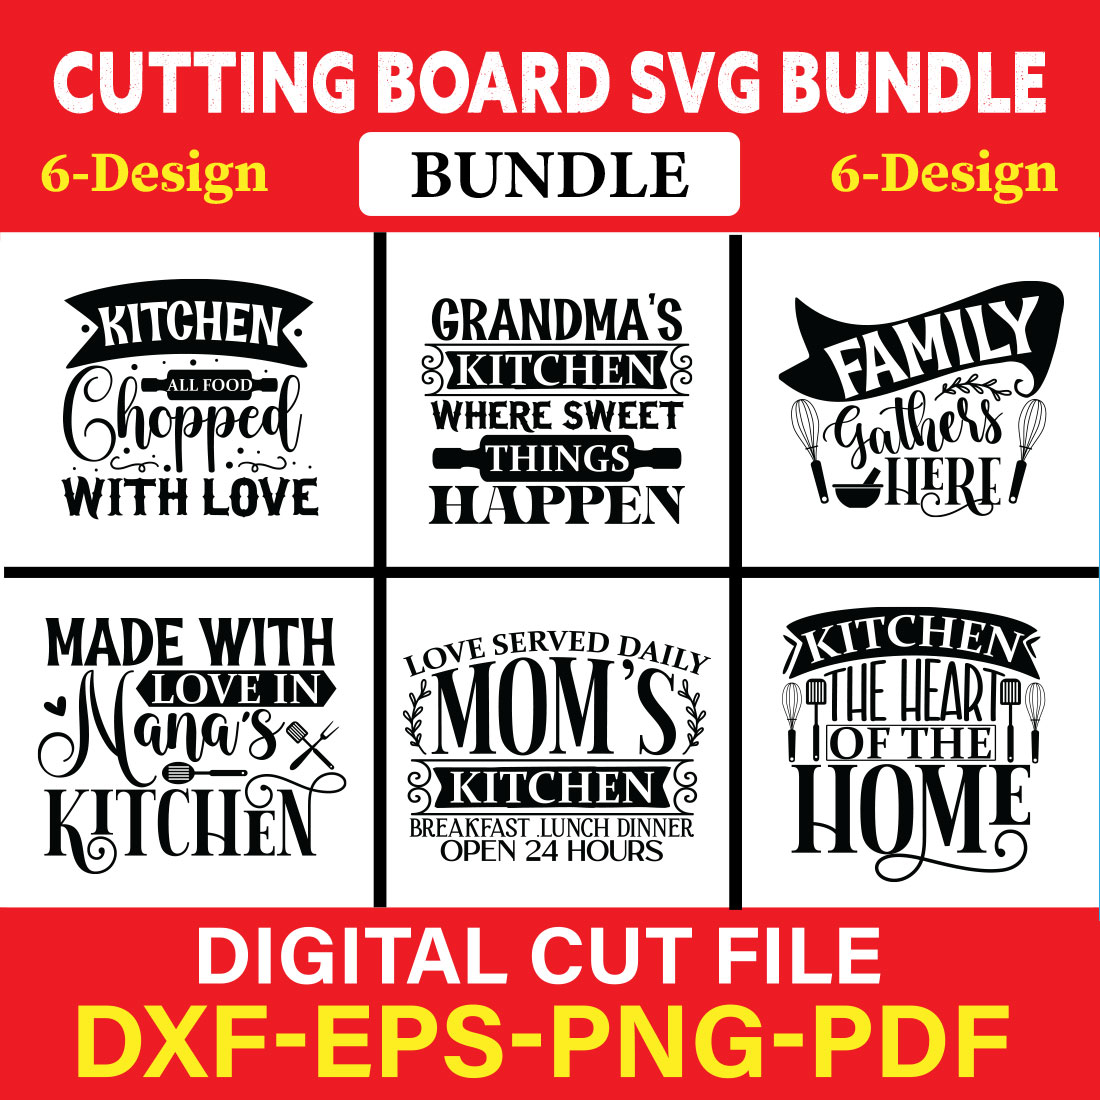 Grandma's kitchen where sweet SVG, Cutting Board SVG Design